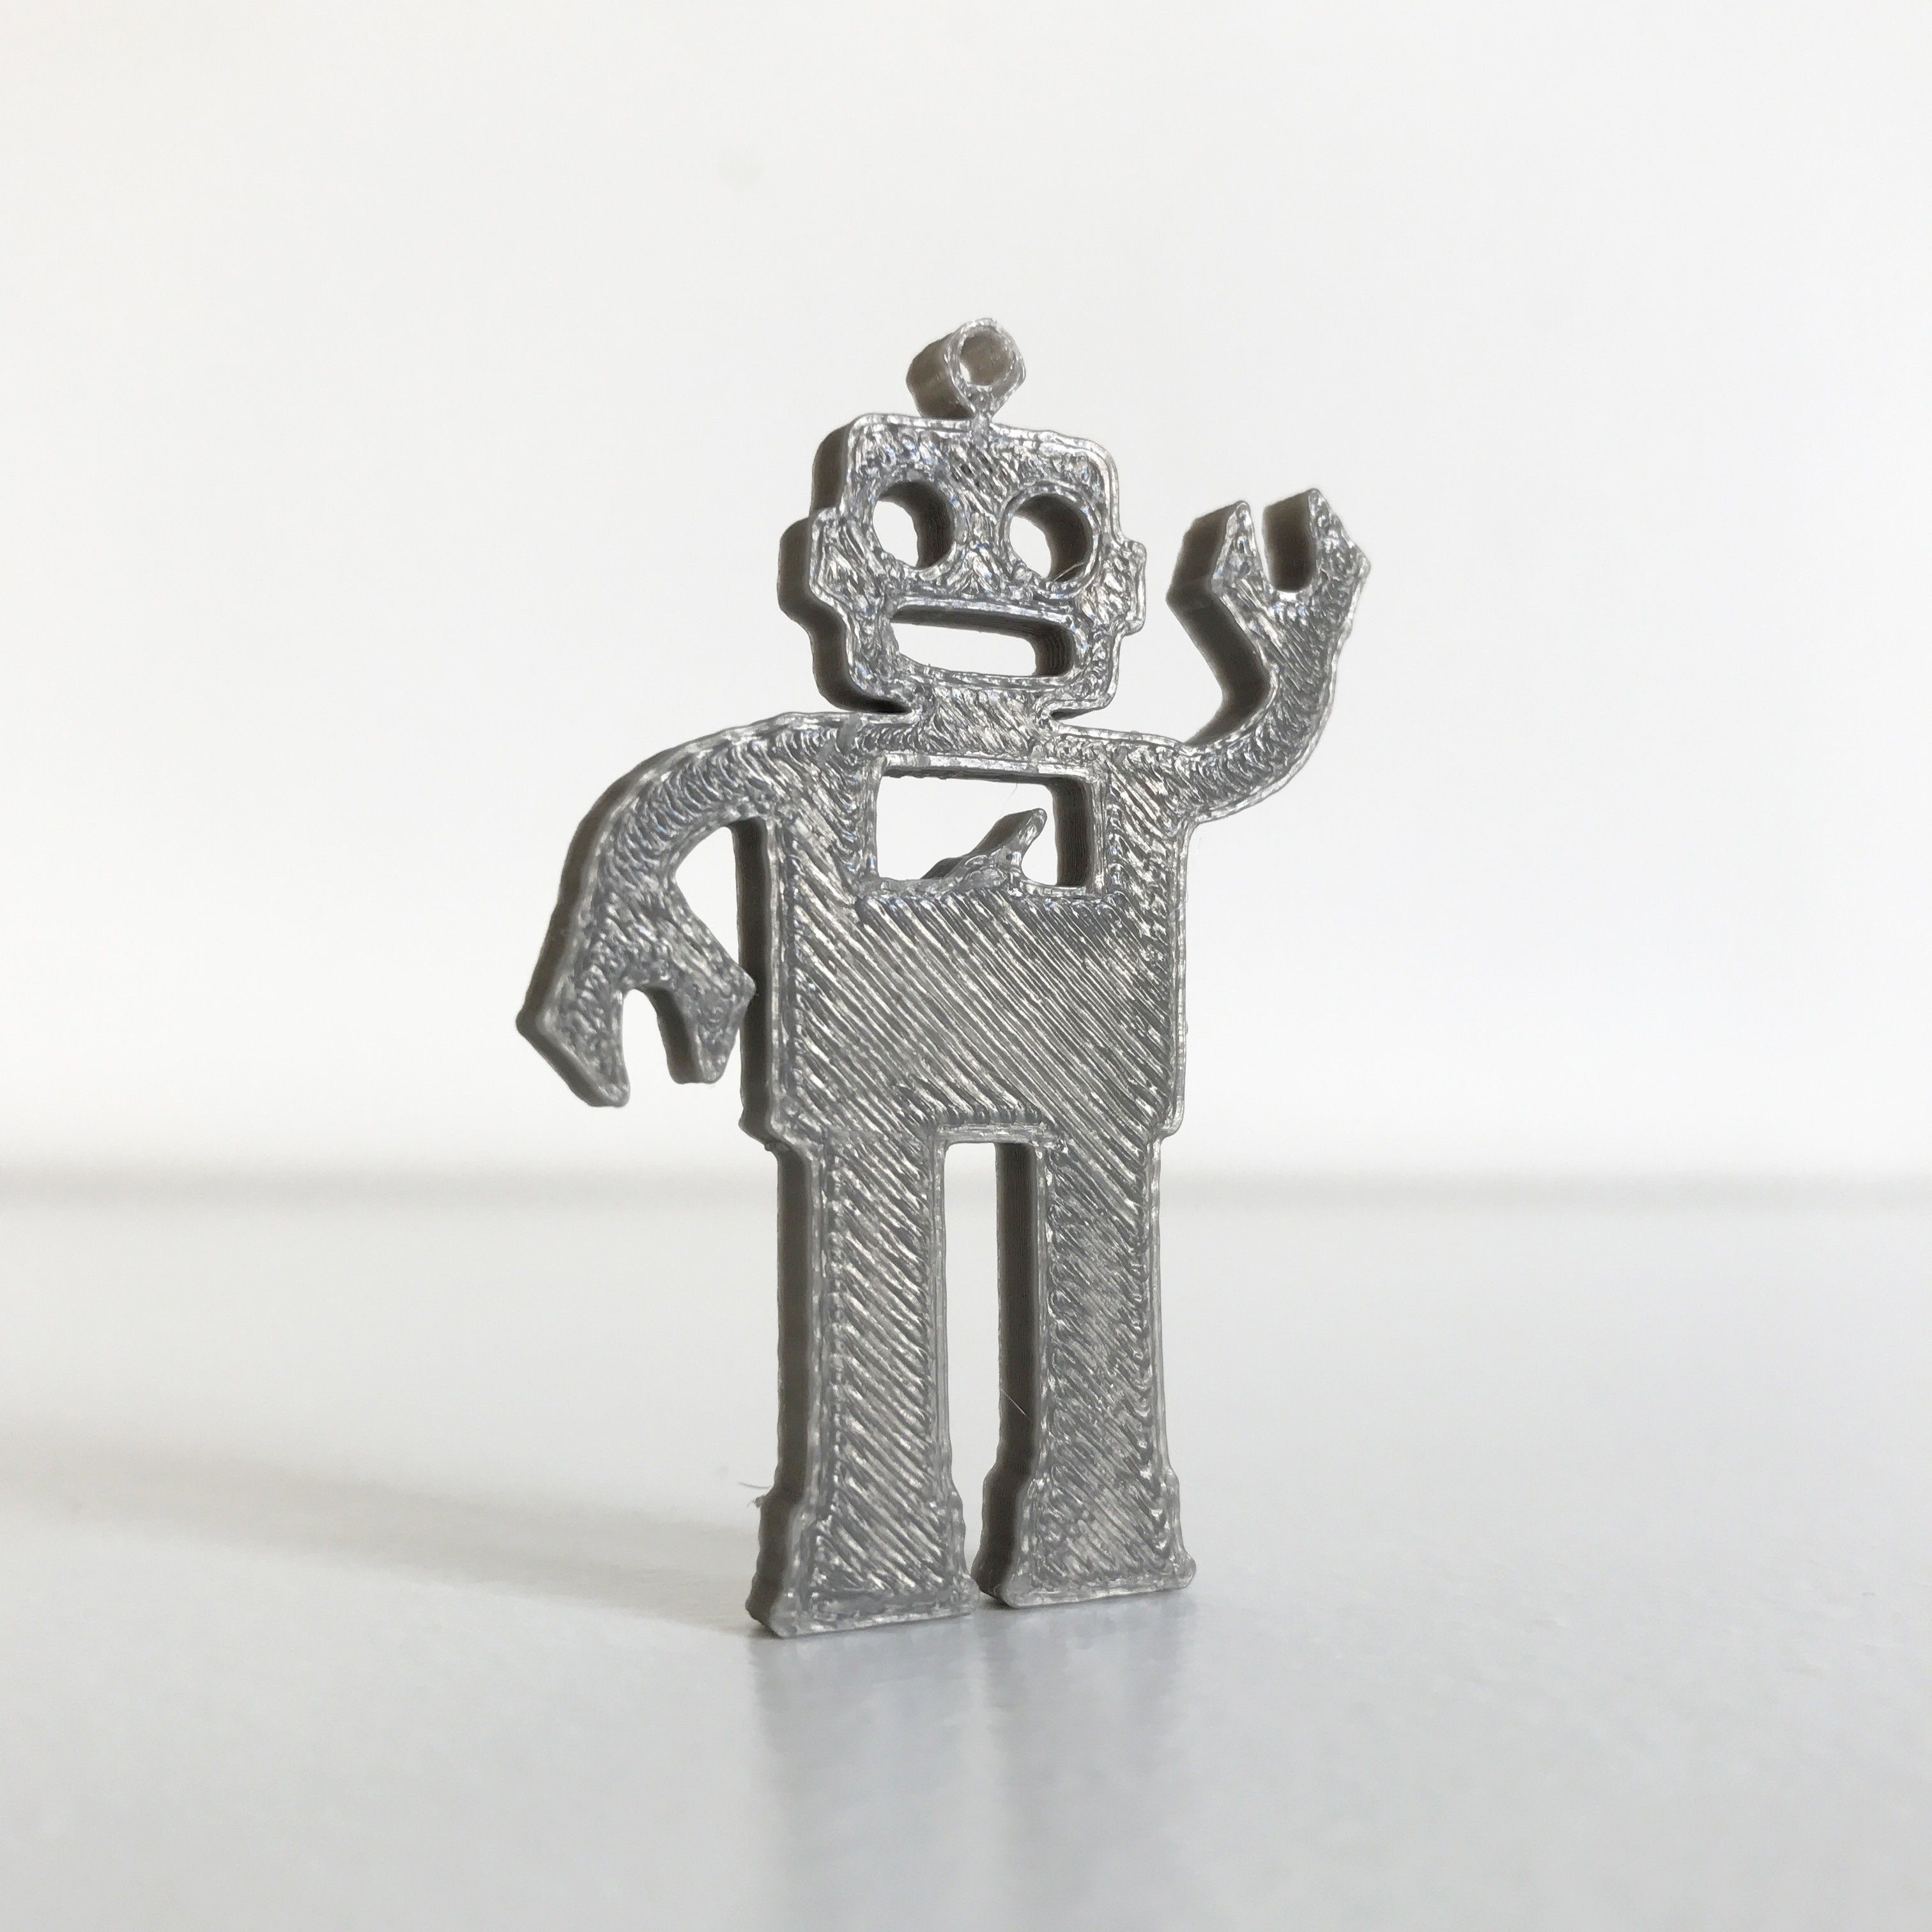 5.JPG Download free STL file Robot pendant • 3D print design, Free-3D-Models